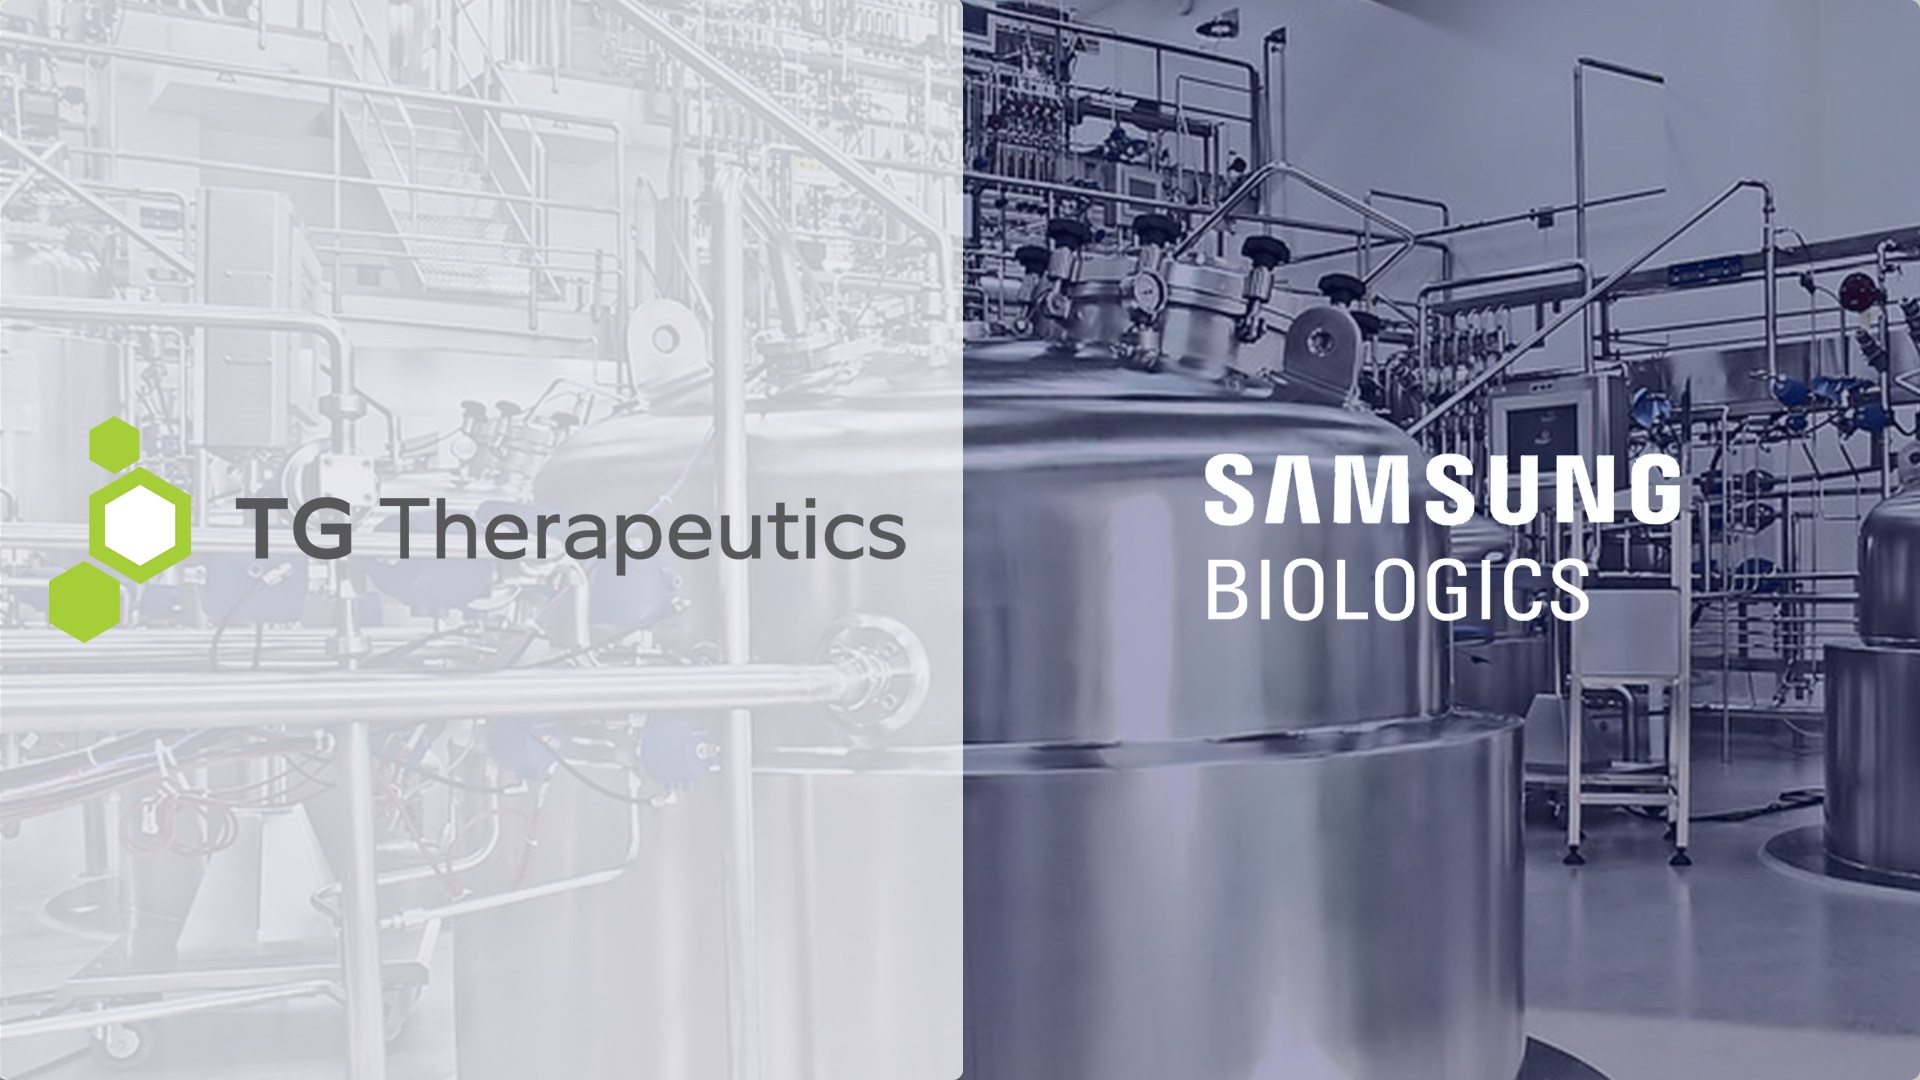 TG Therapeutics and Samsung Biologics Partnership Image